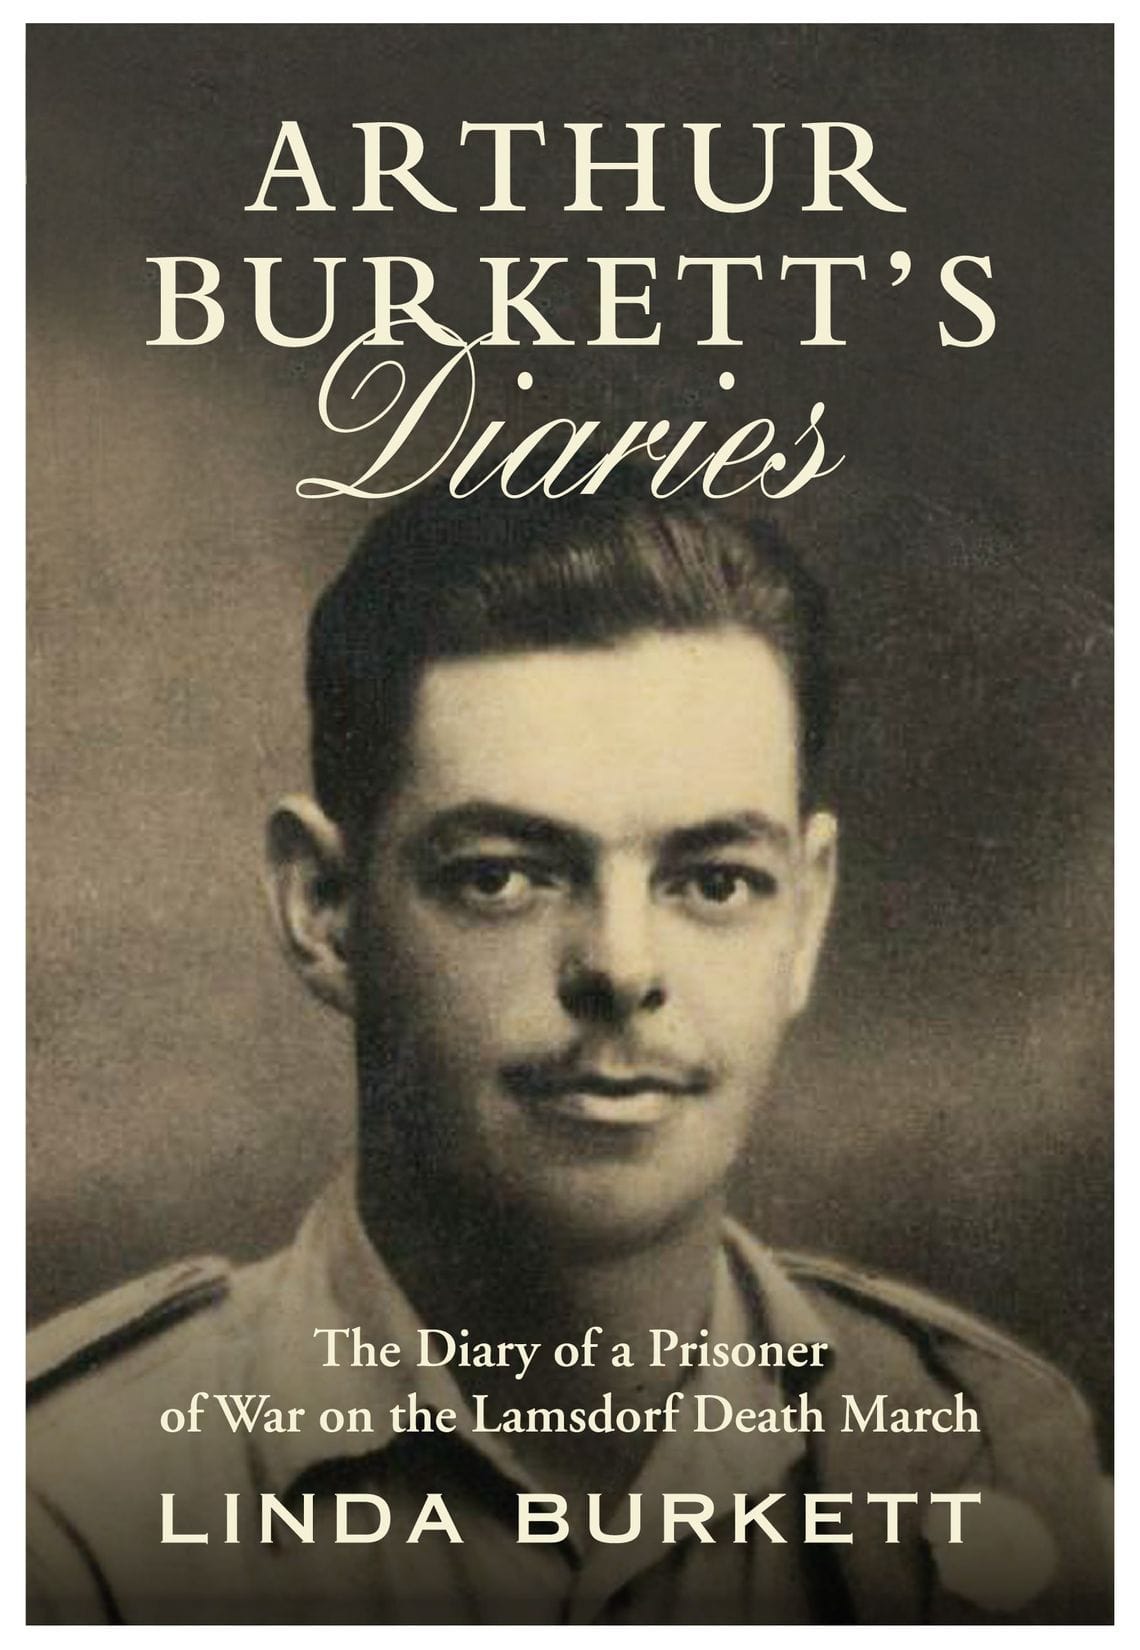 The Story Behind 'Arthur Burkett's Diaries'